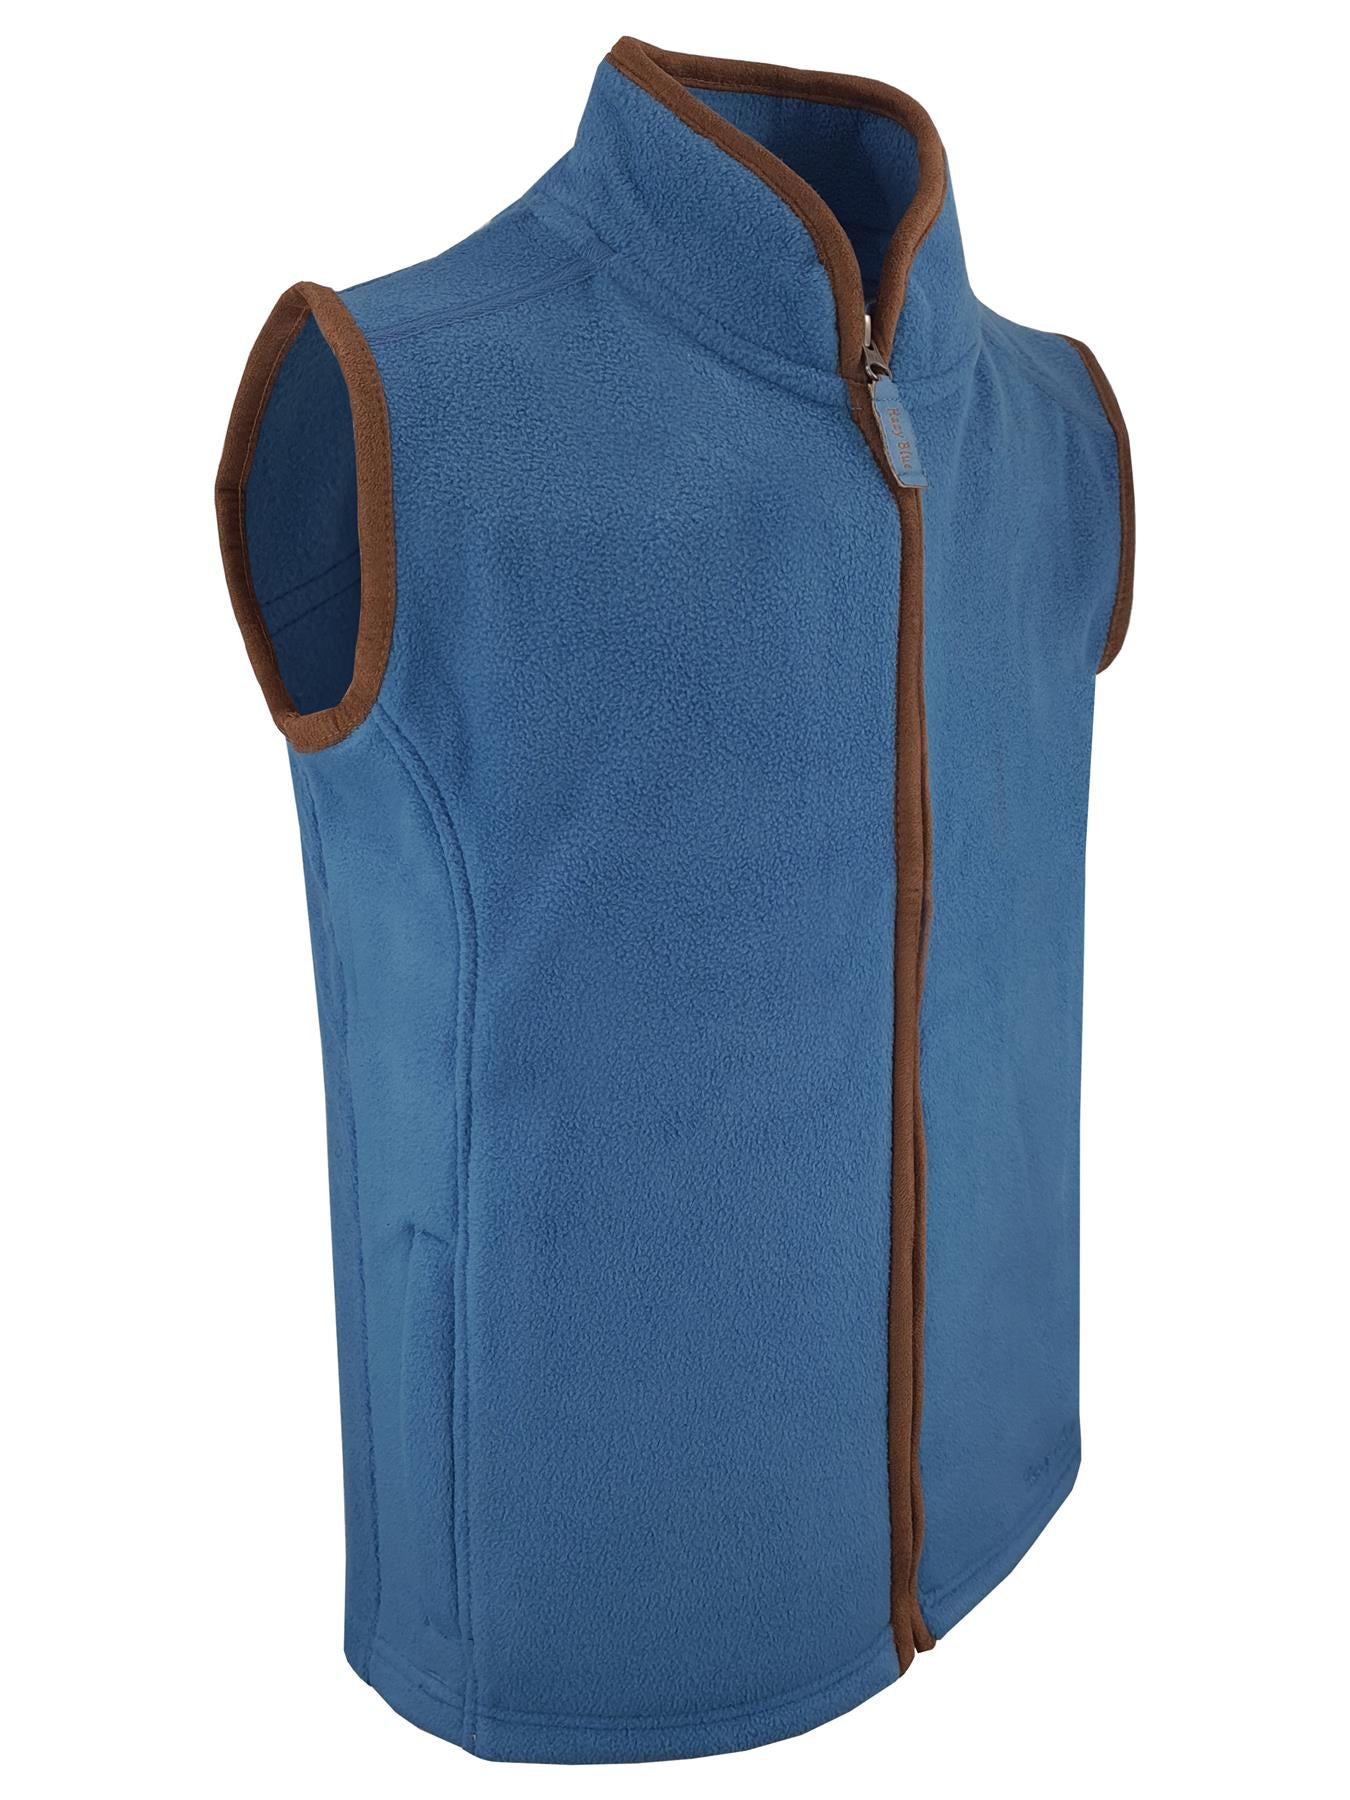 Hazy Blue Kids Kaden Soft Fleece Bodywarmer Gilet Vest - Premium clothing from Hazy Blue - Just $19.99! Shop now at Warwickshire Clothing